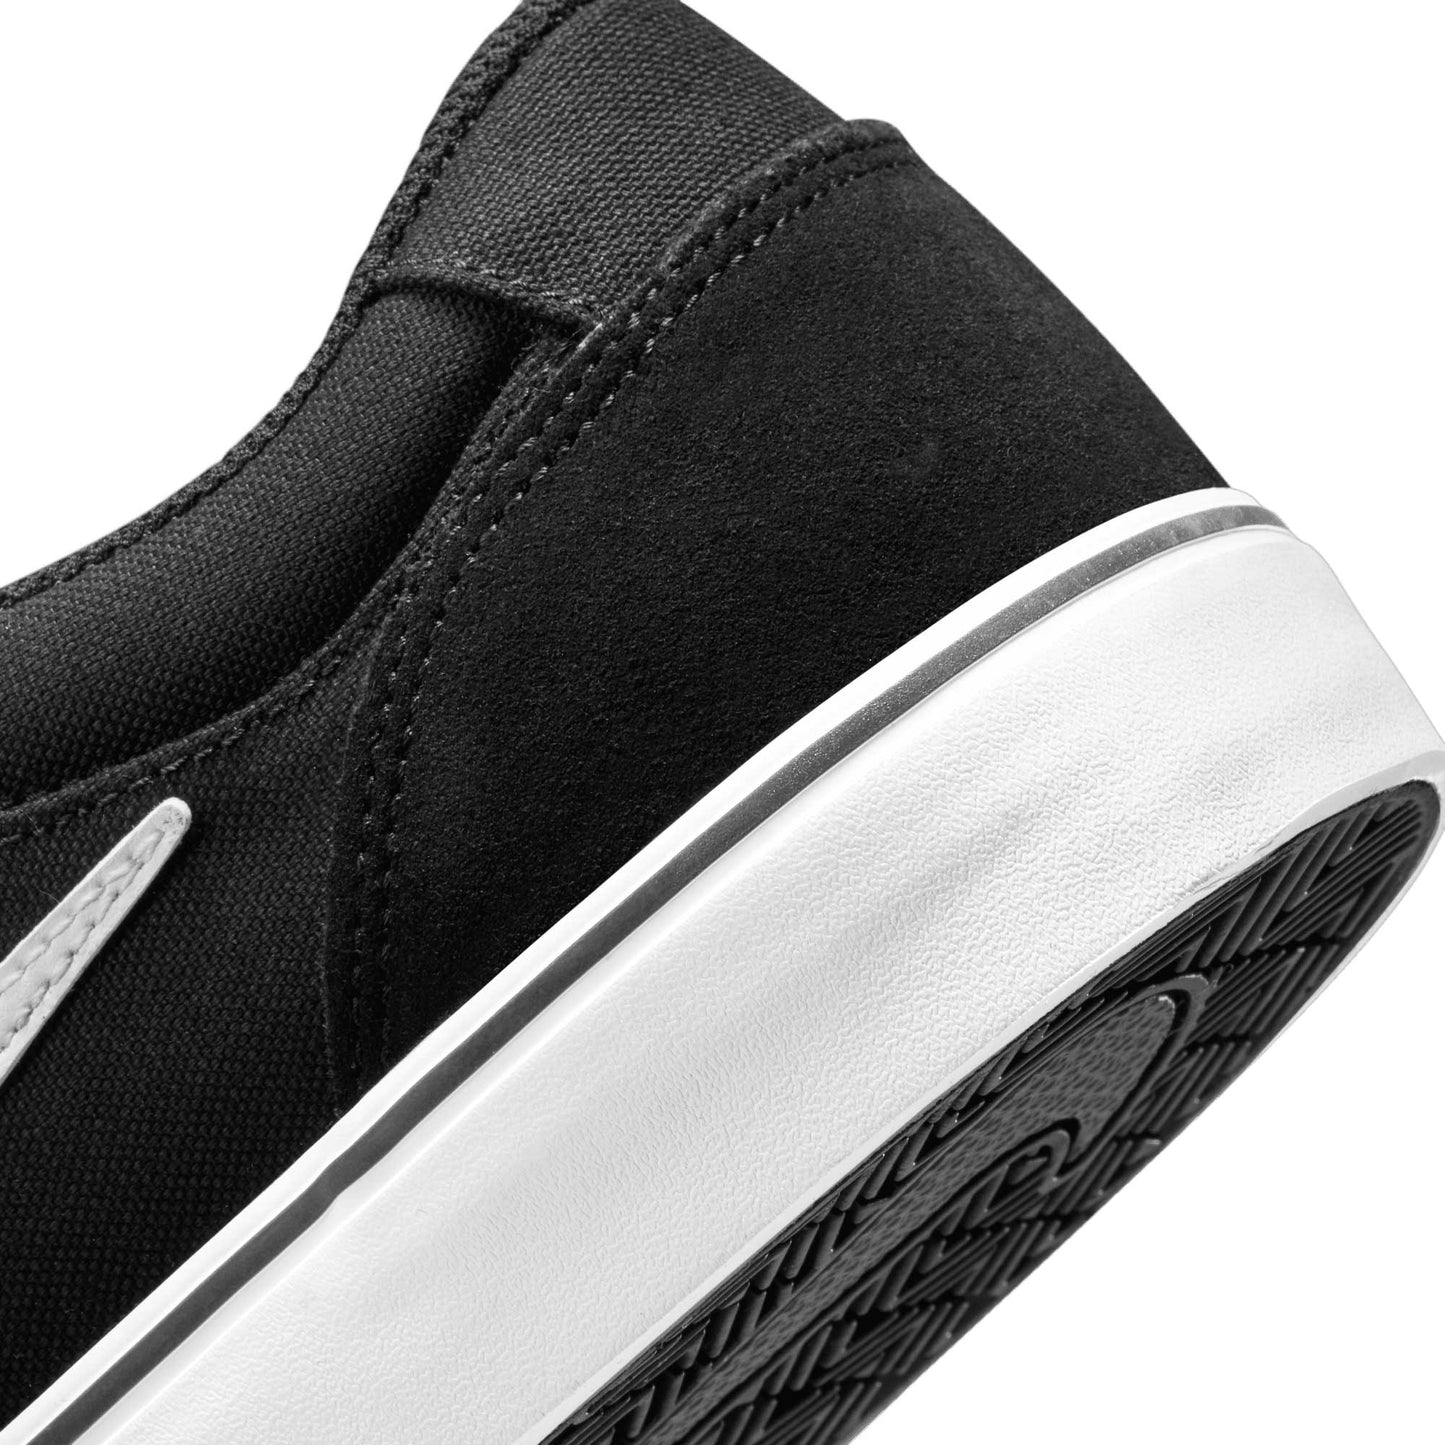 Nike SB Chron 2, black/white-black - Tiki Room Skateboards - 9